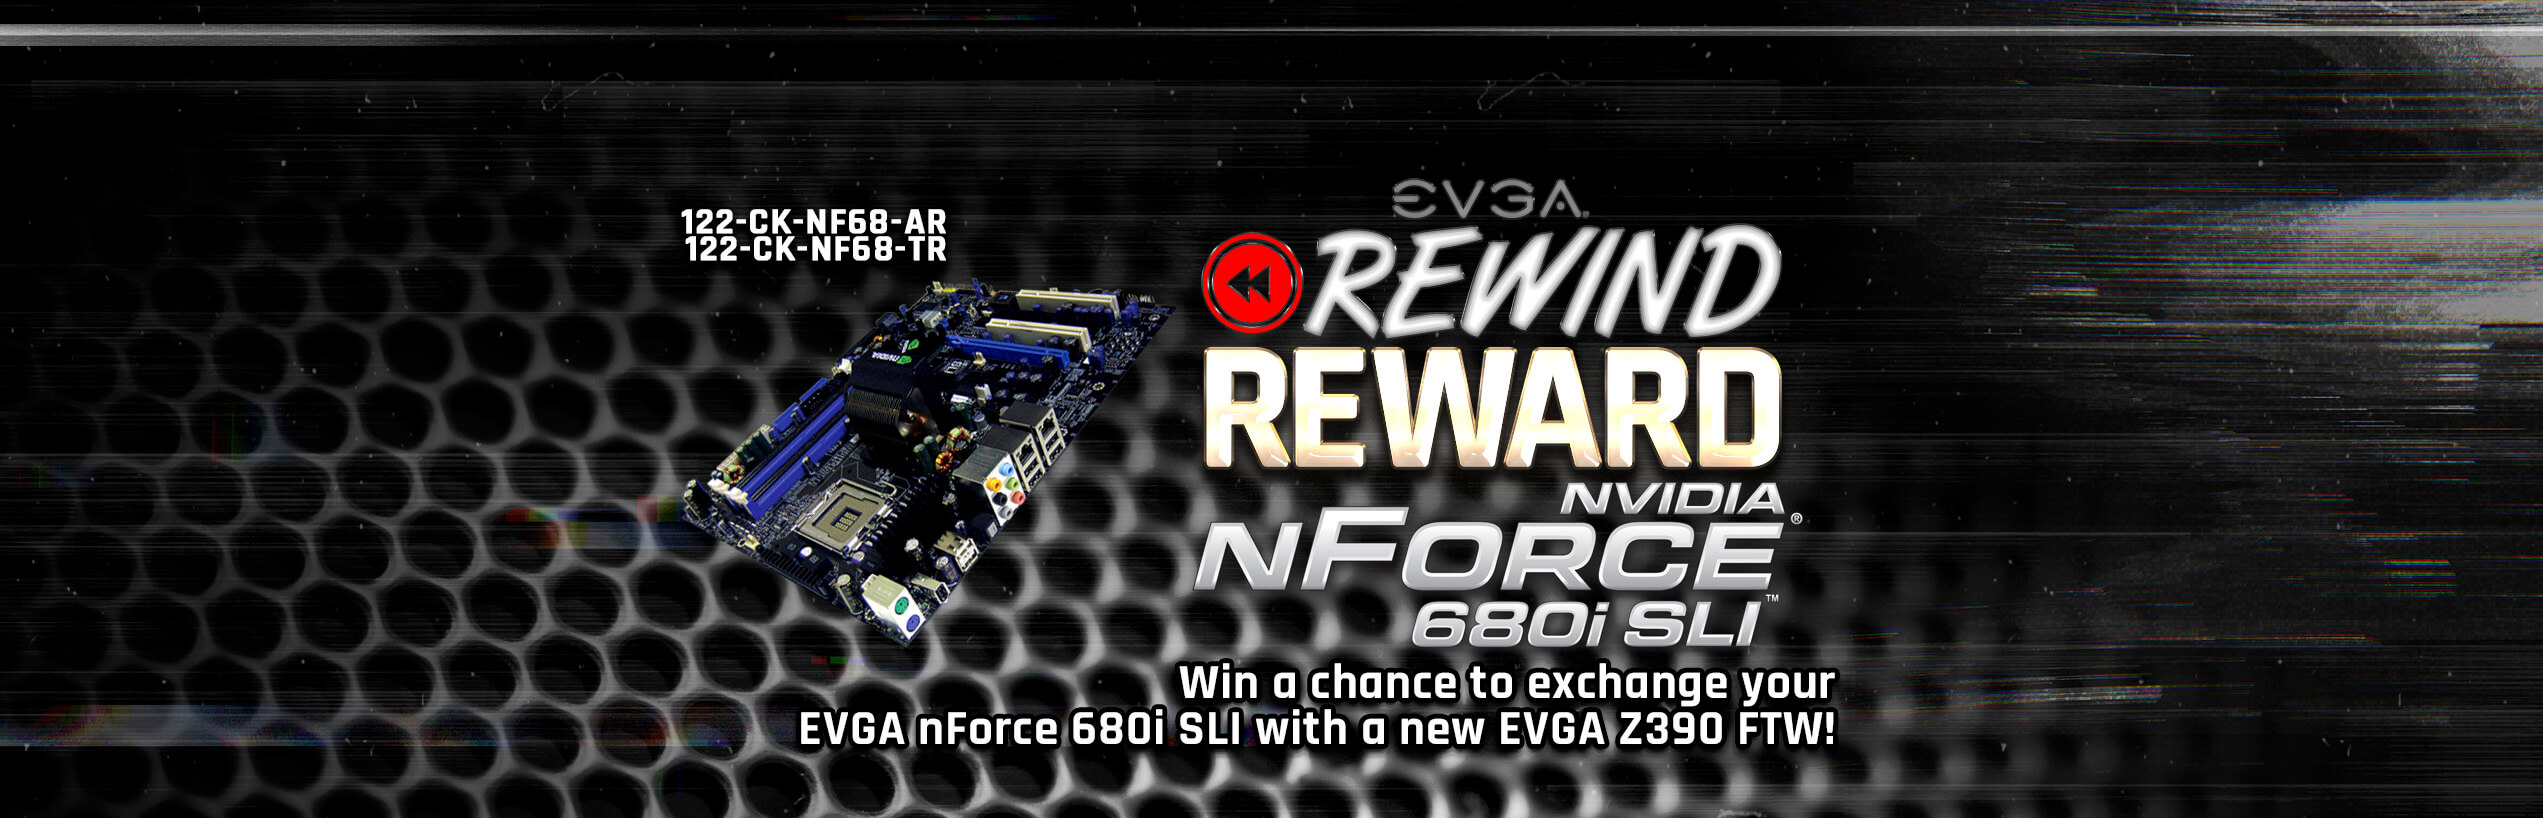 Rewind Reward EVGA nForce 680i SLI to EVGA Z390 FTW